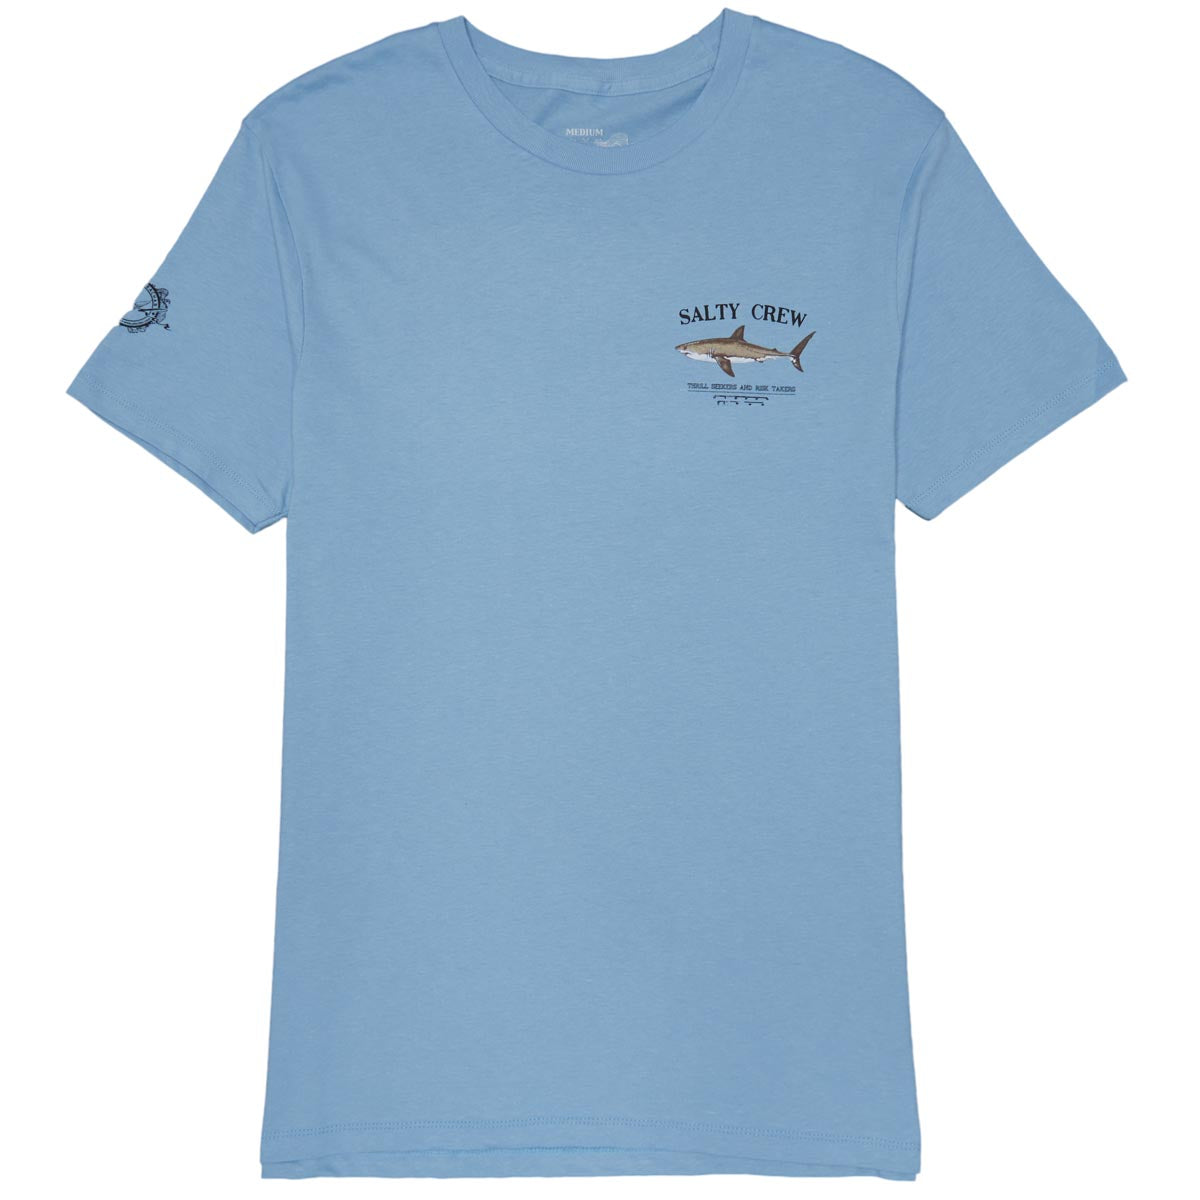 Salty Crew Bruce T-Shirt - Marine Blue image 2